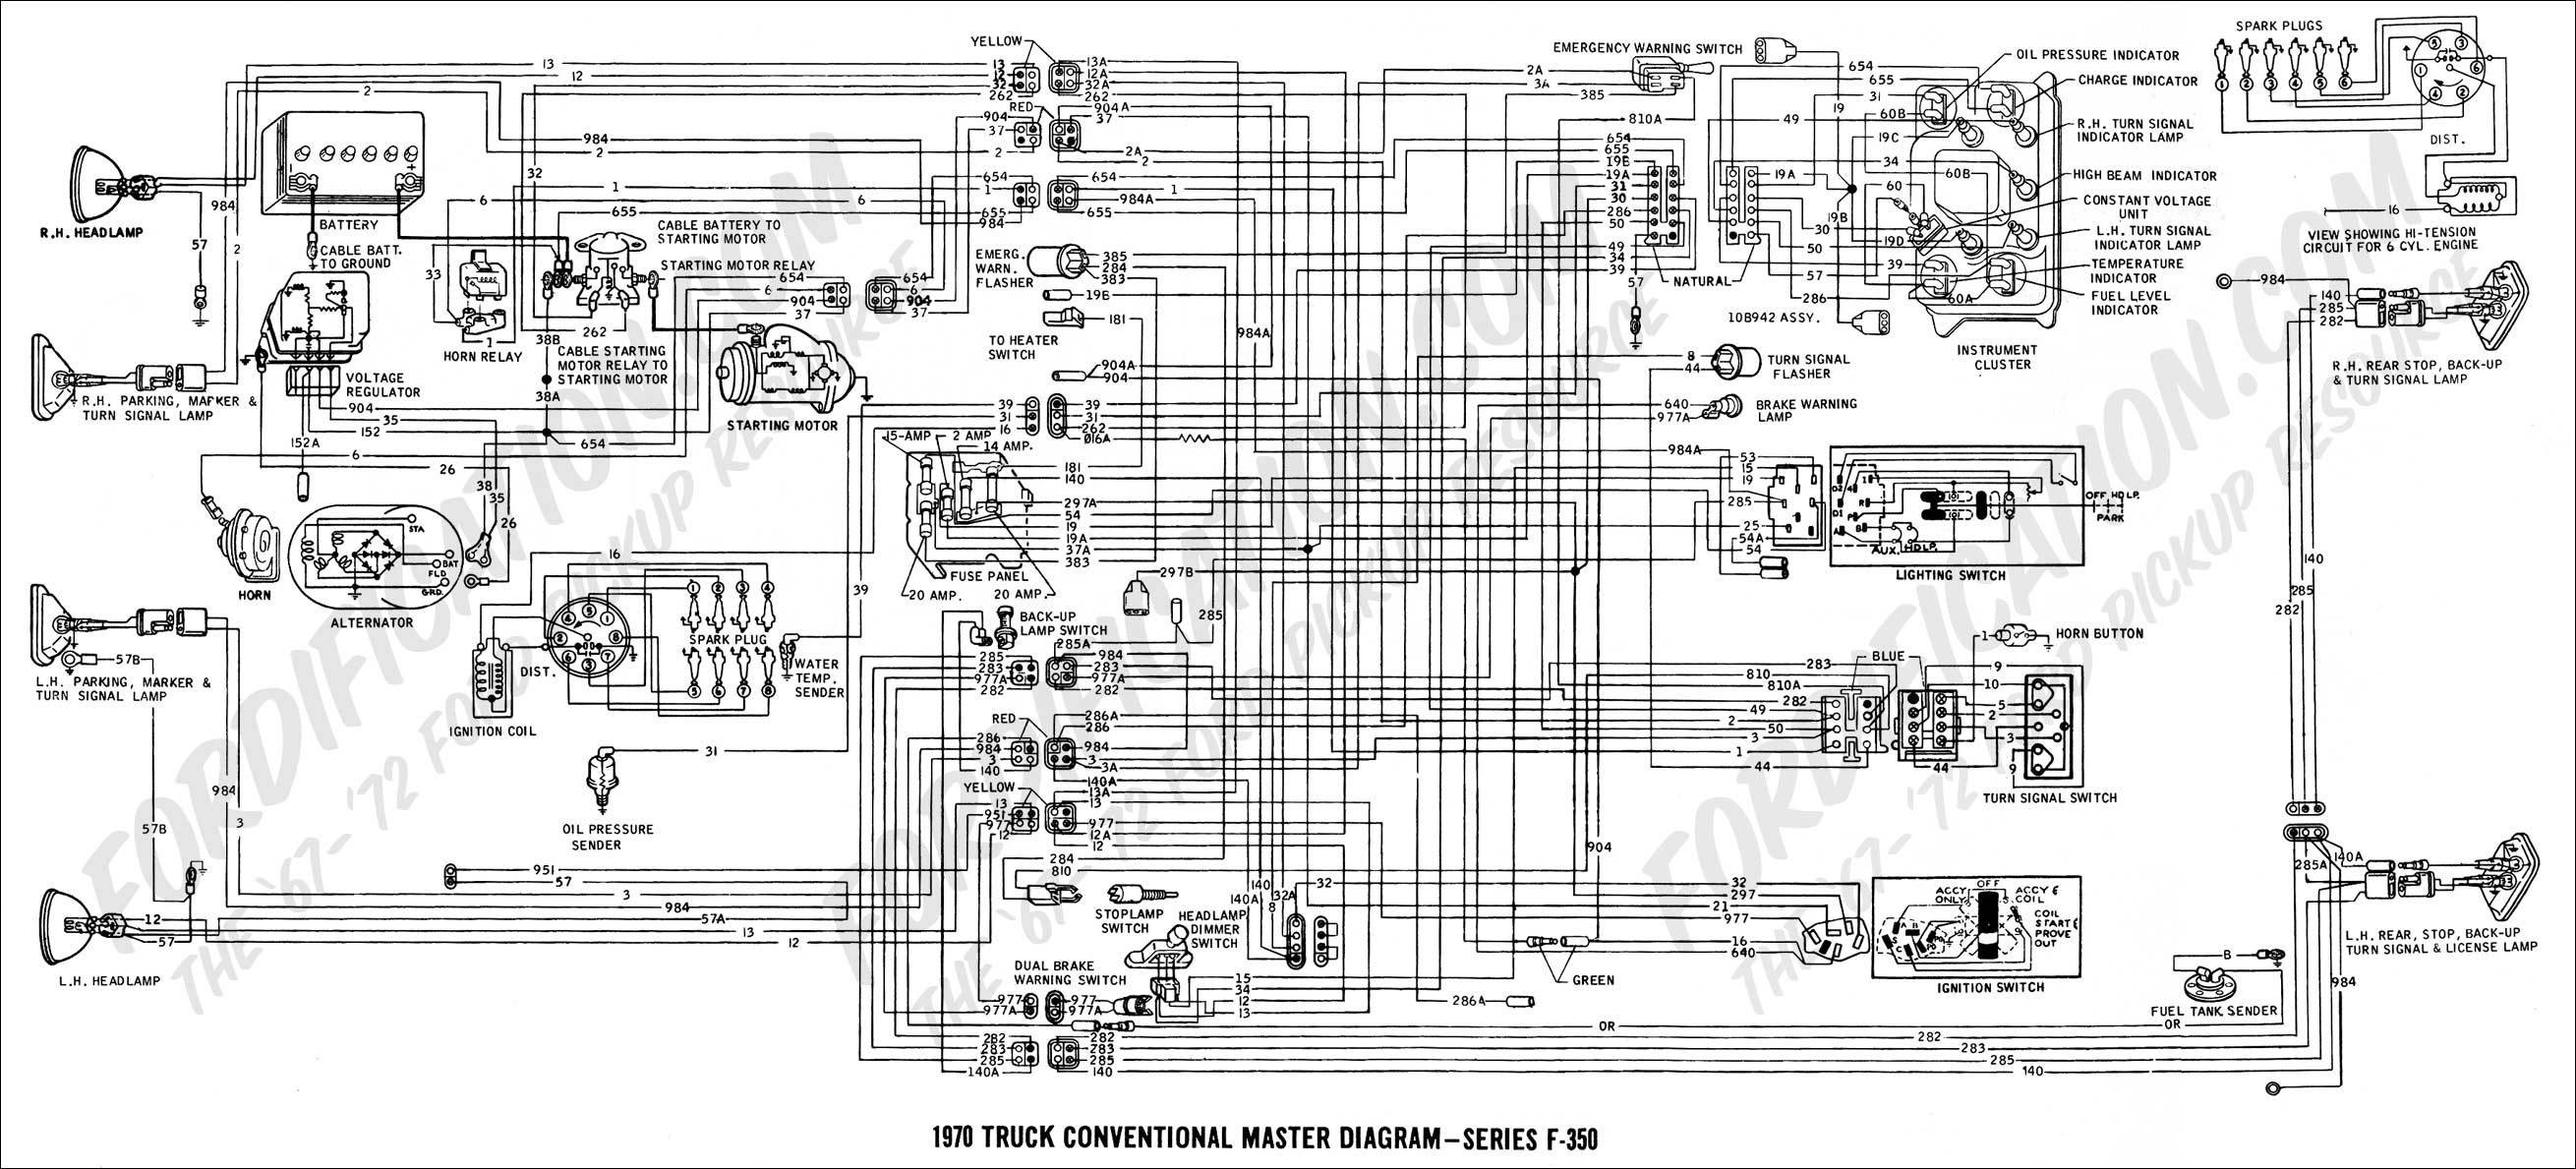 2013 ford F150 Wiring Diagram Bucket 2002 F350 Superduty Electrical Wiring Diagrams Wiring Info •